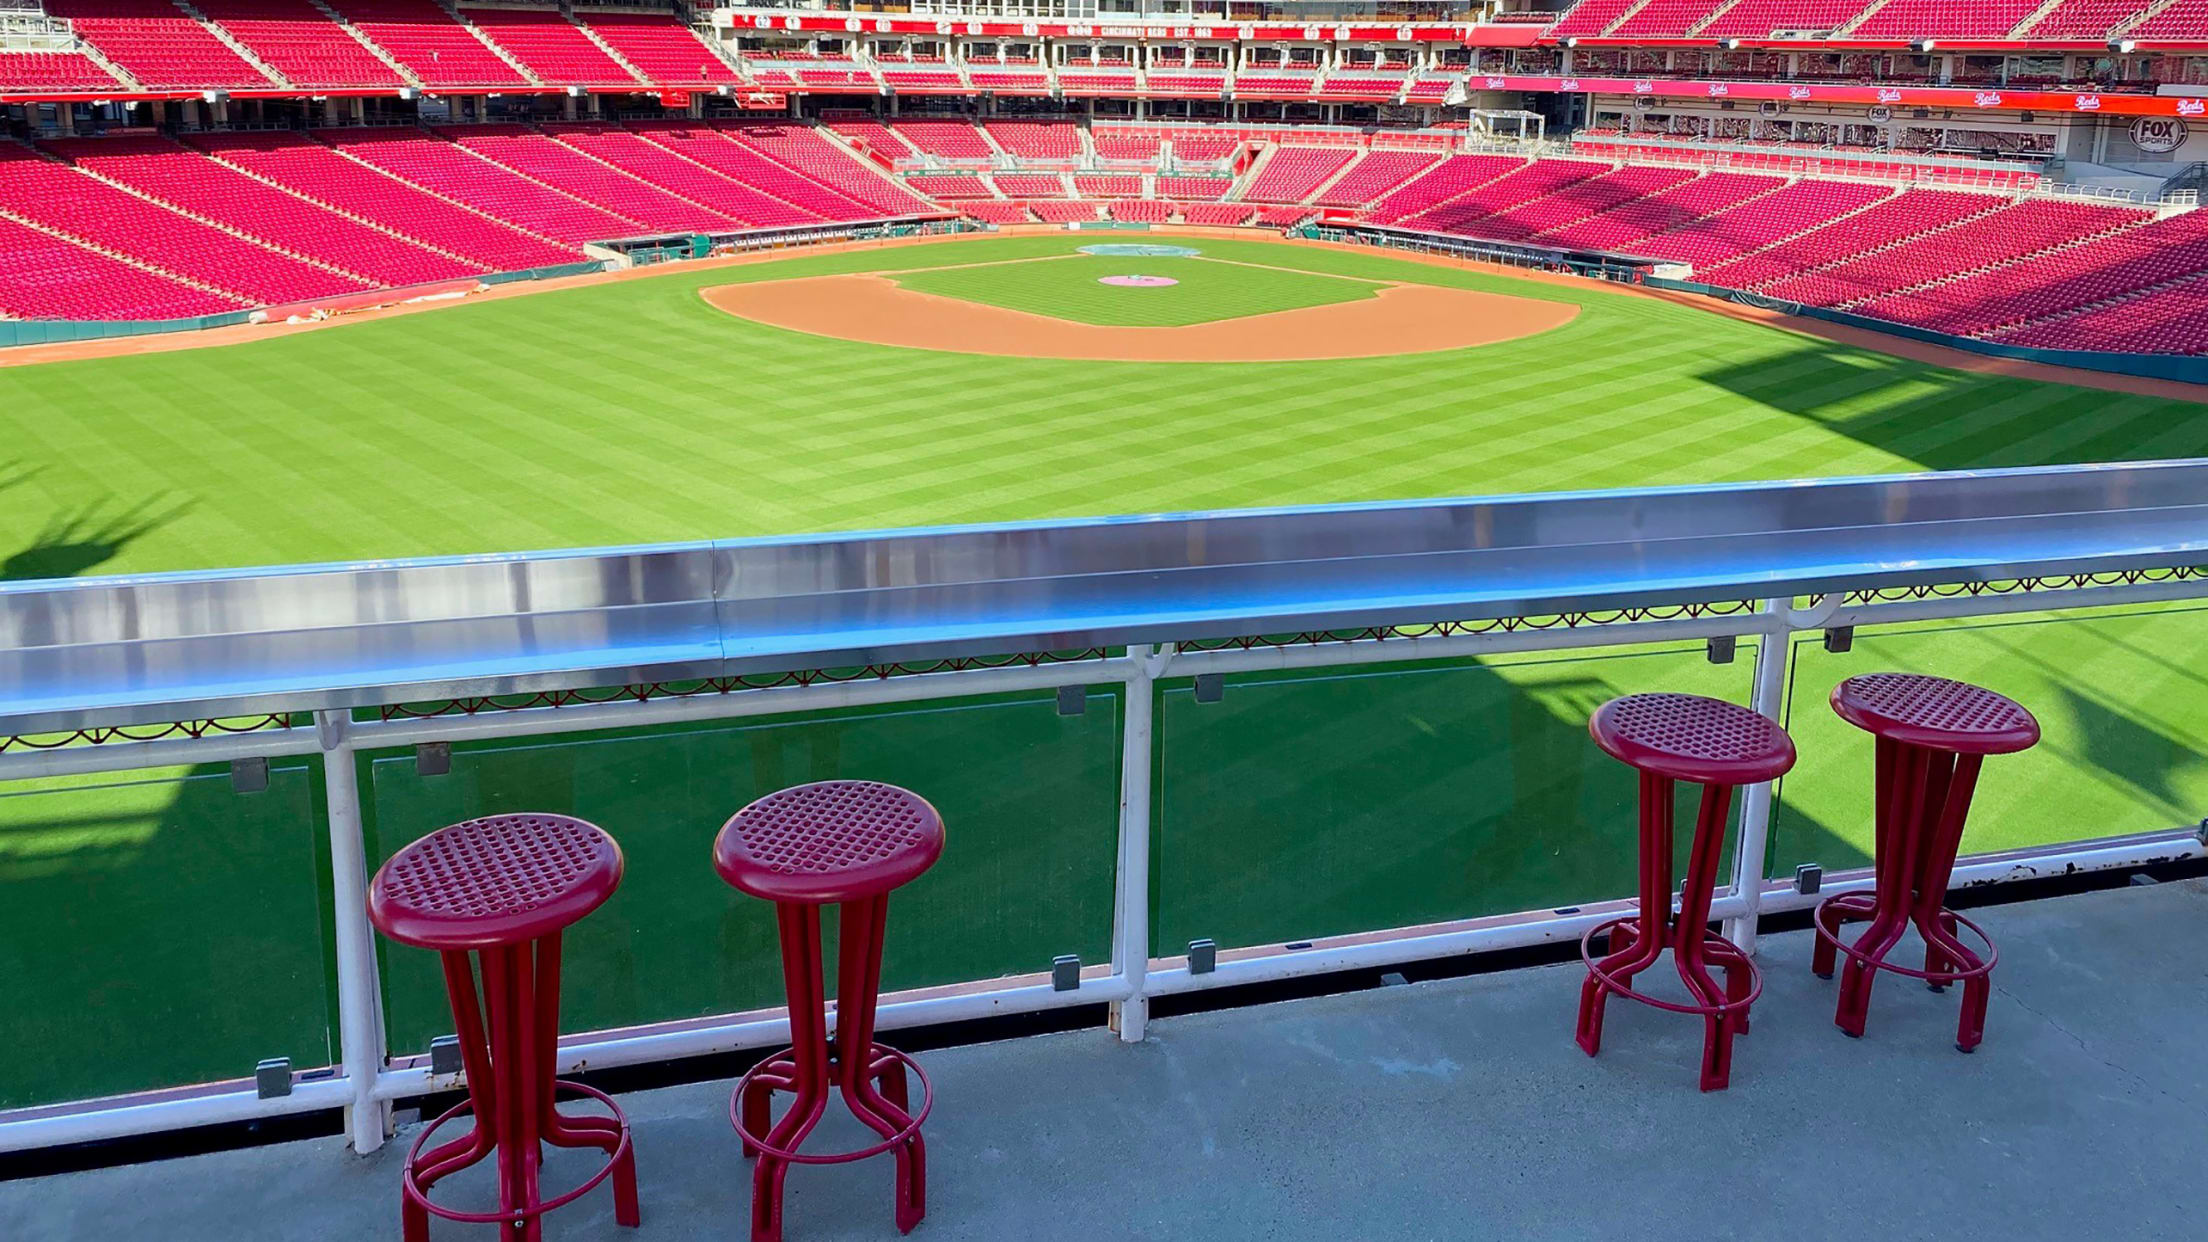 Reds stadium needs new seats, so county gets creative